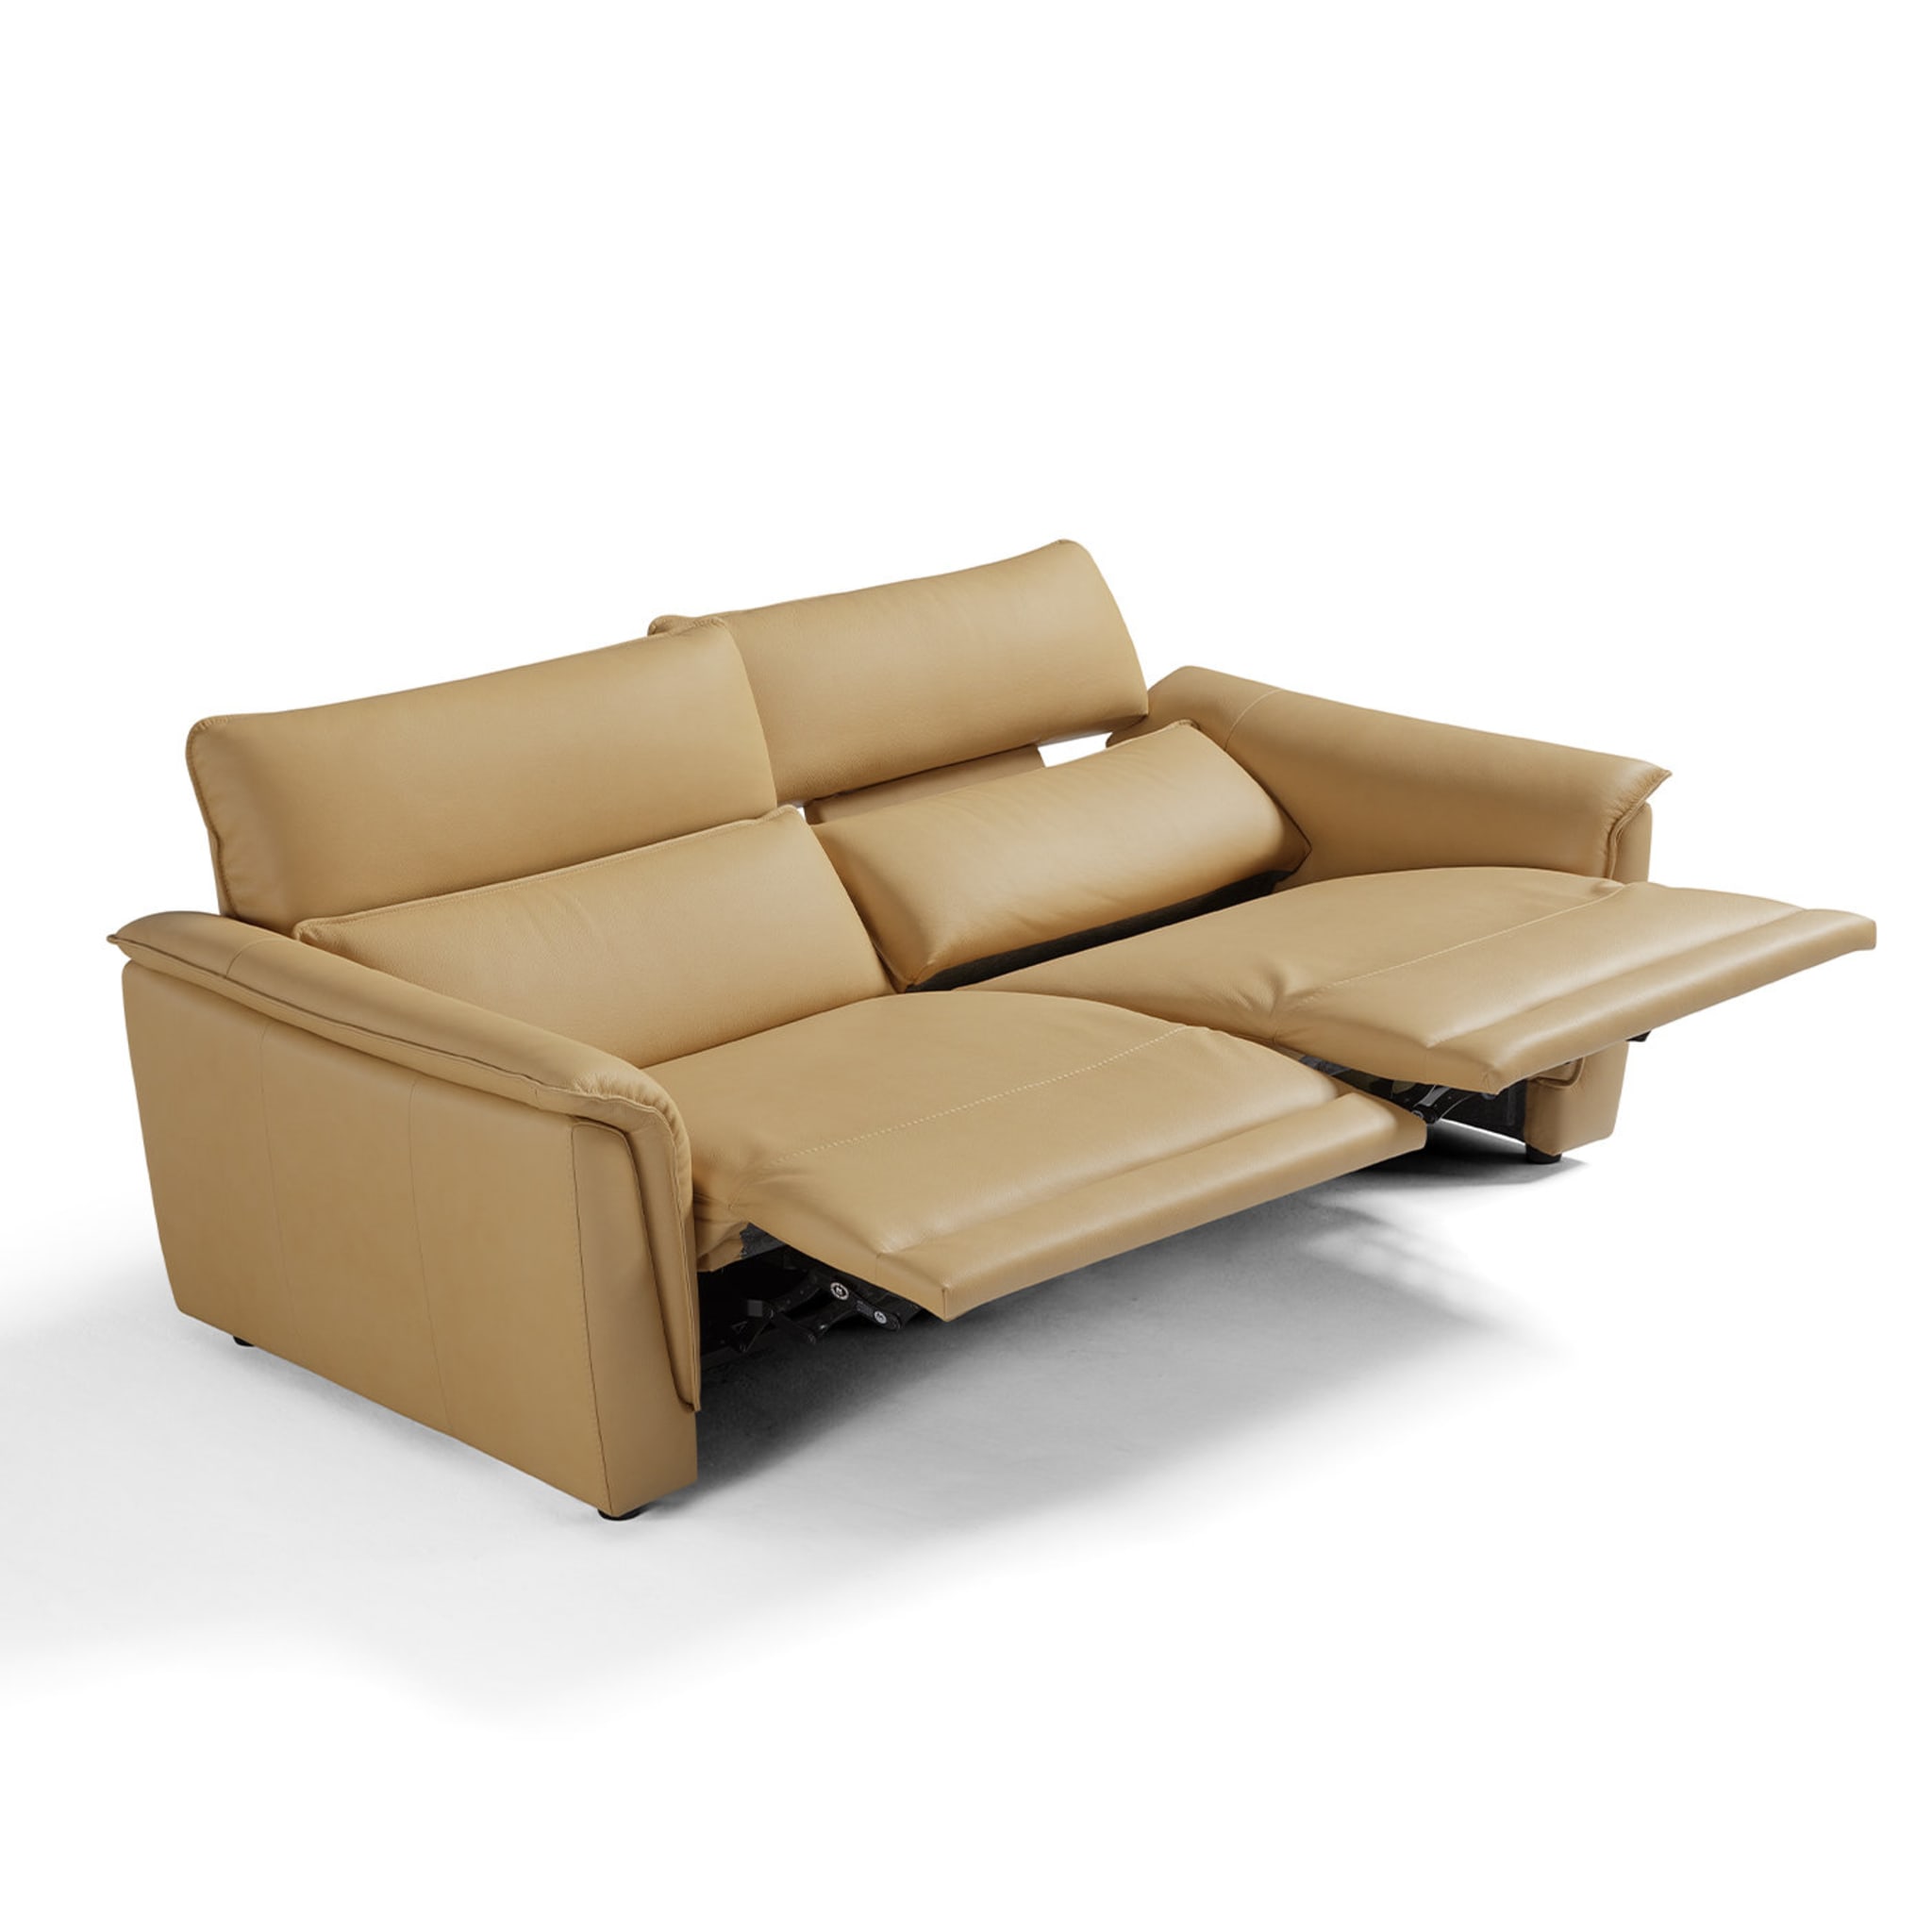 Bovino Sand Leather 2-Seater Armchair - Alternative view 2